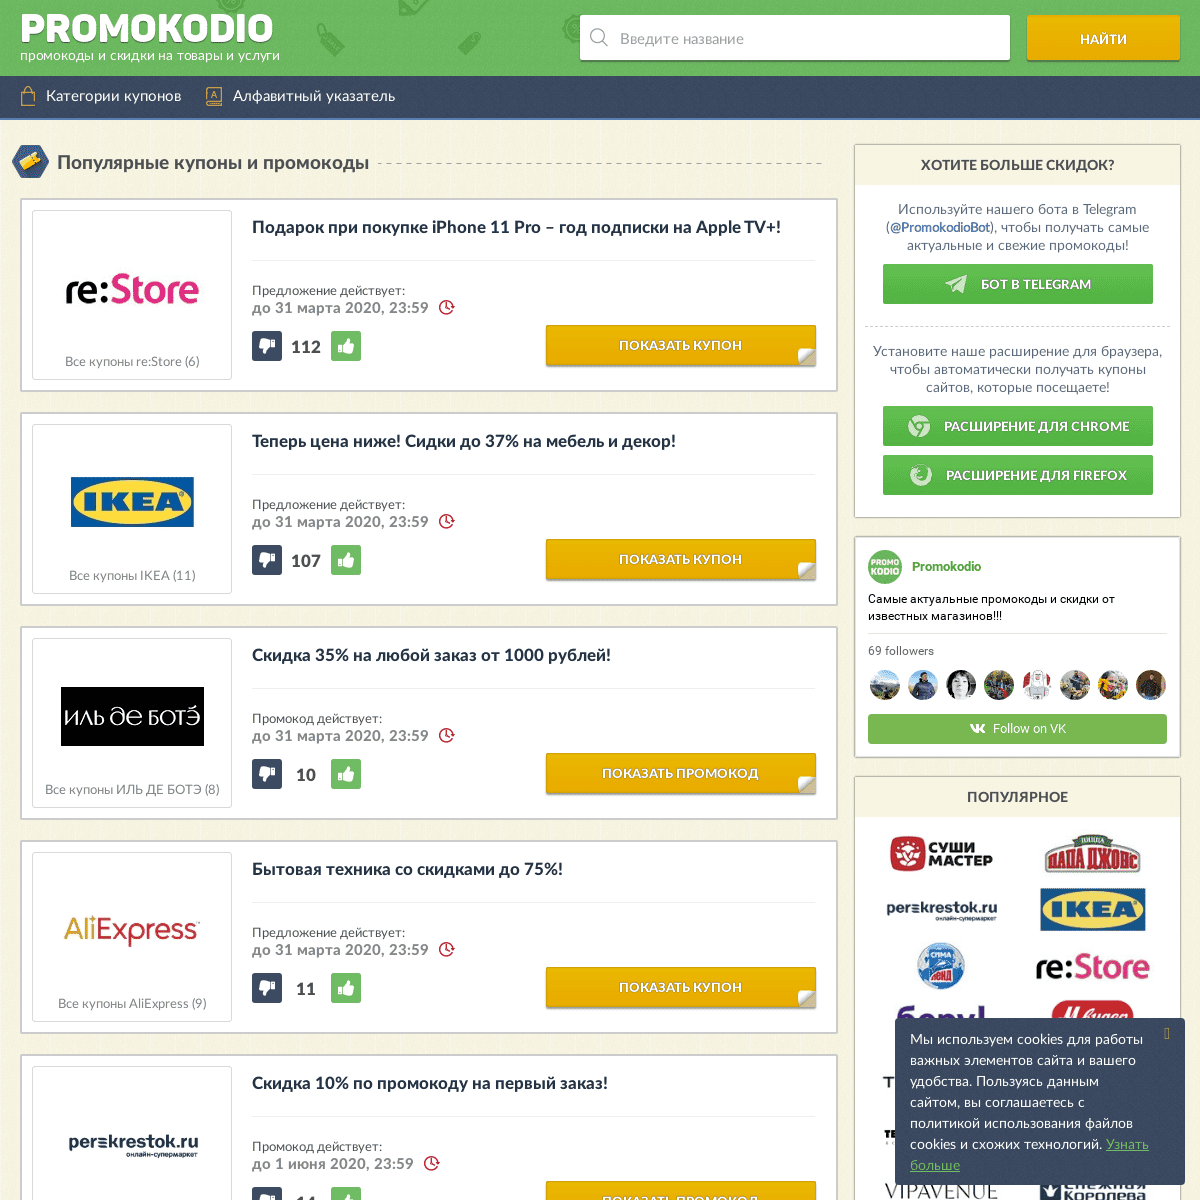 A complete backup of promokodio.com